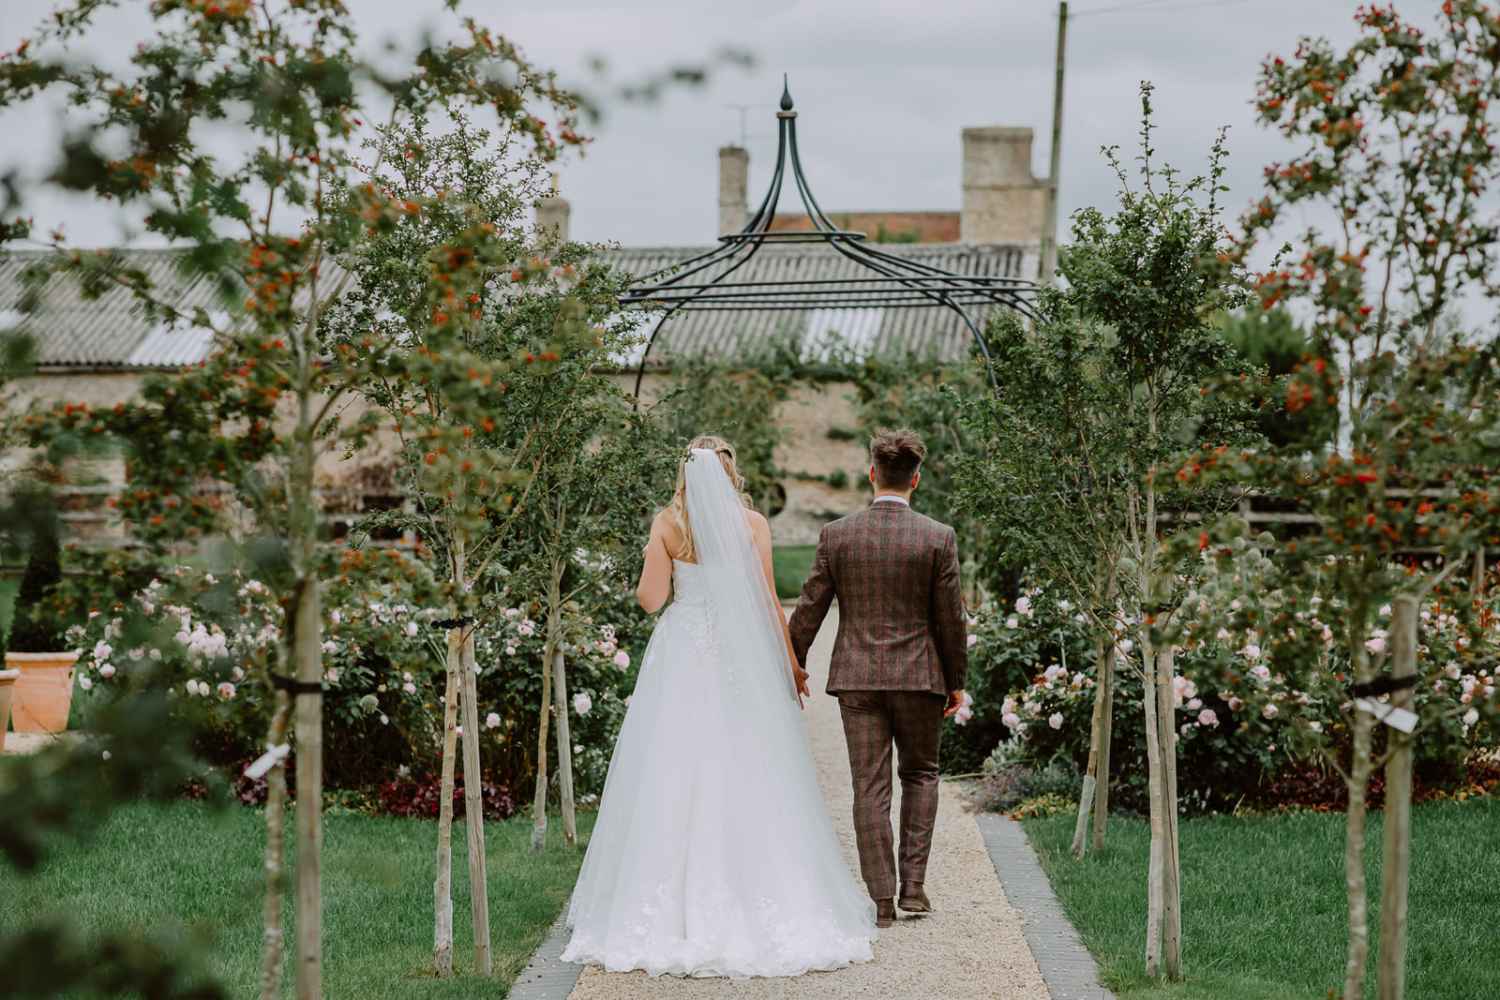 The wedding couple walks away through the Stratton court Barn formal rose gardens.